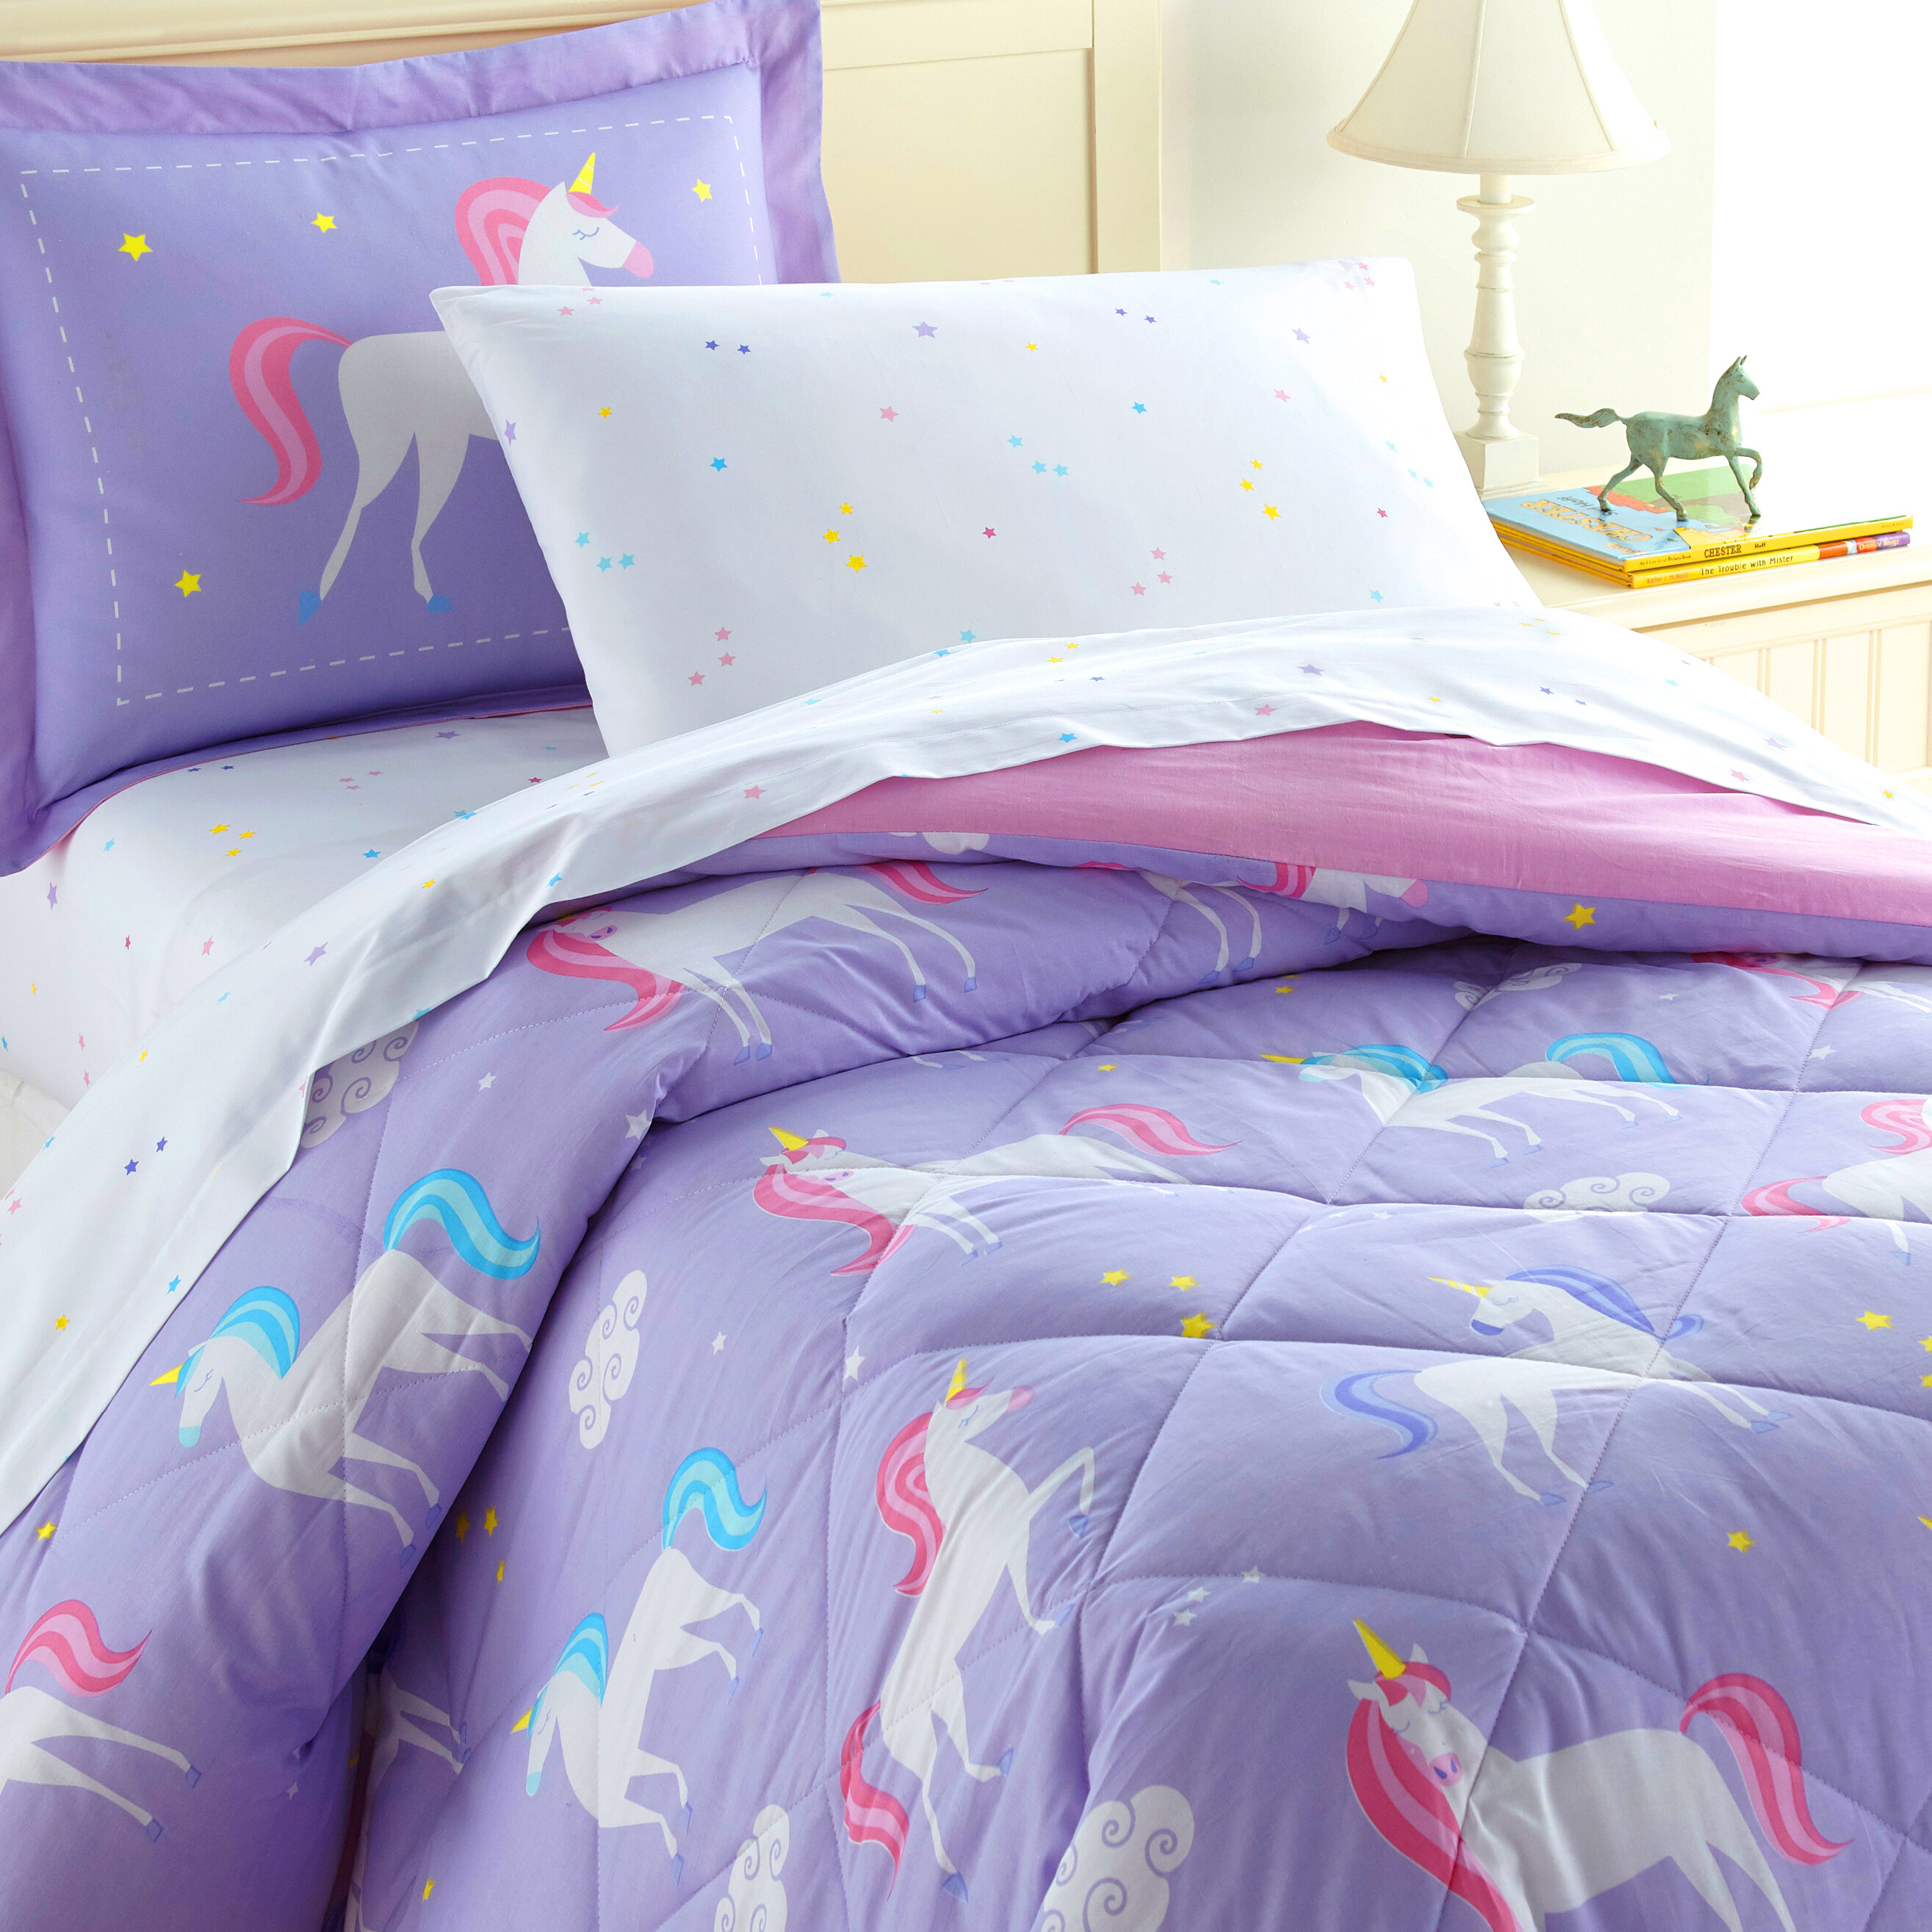 Full Sleepwish Kids Unicorn Comforter Set 3D Gallop Rainbow Unicorn Print Bedding with 2 Pillow Shams and 1 Cushion Cover Unicorn Pattern 4 Pieces Reversible Comforter for Fantasy Girls